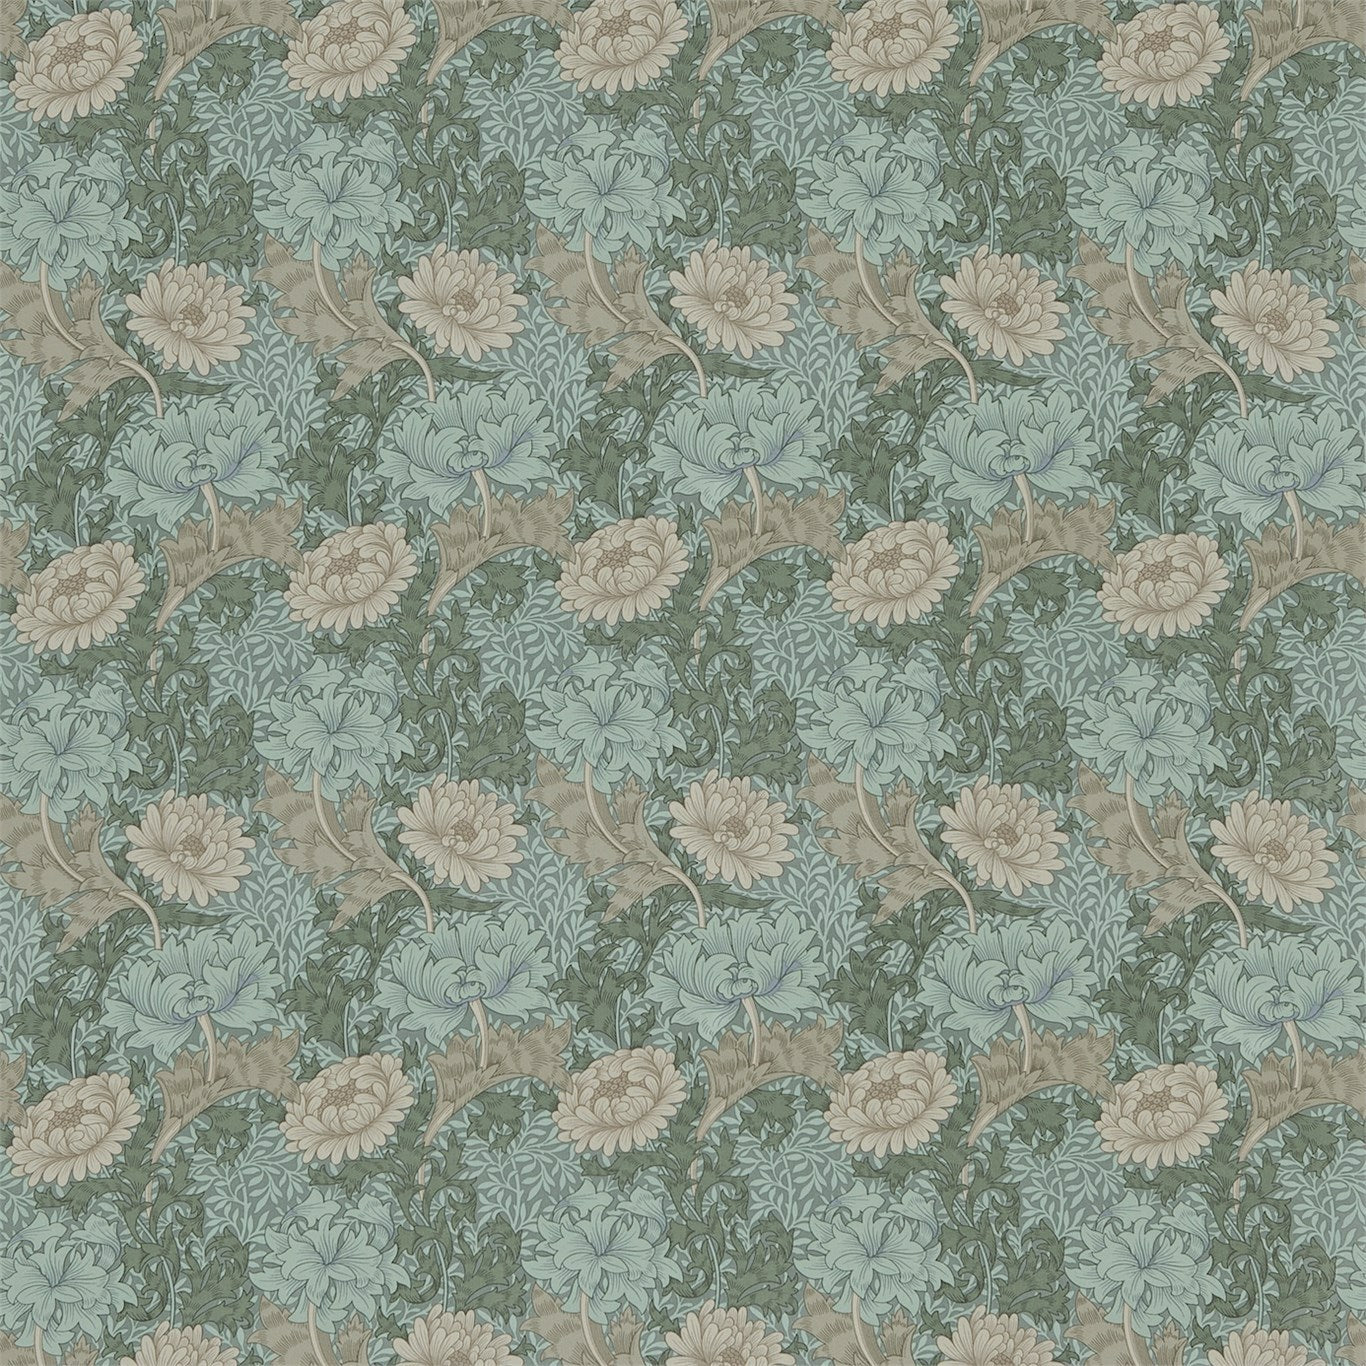 Chrysanthemum Fabric by Morris & Co. - DJA1CY202 - Green/Biscuit